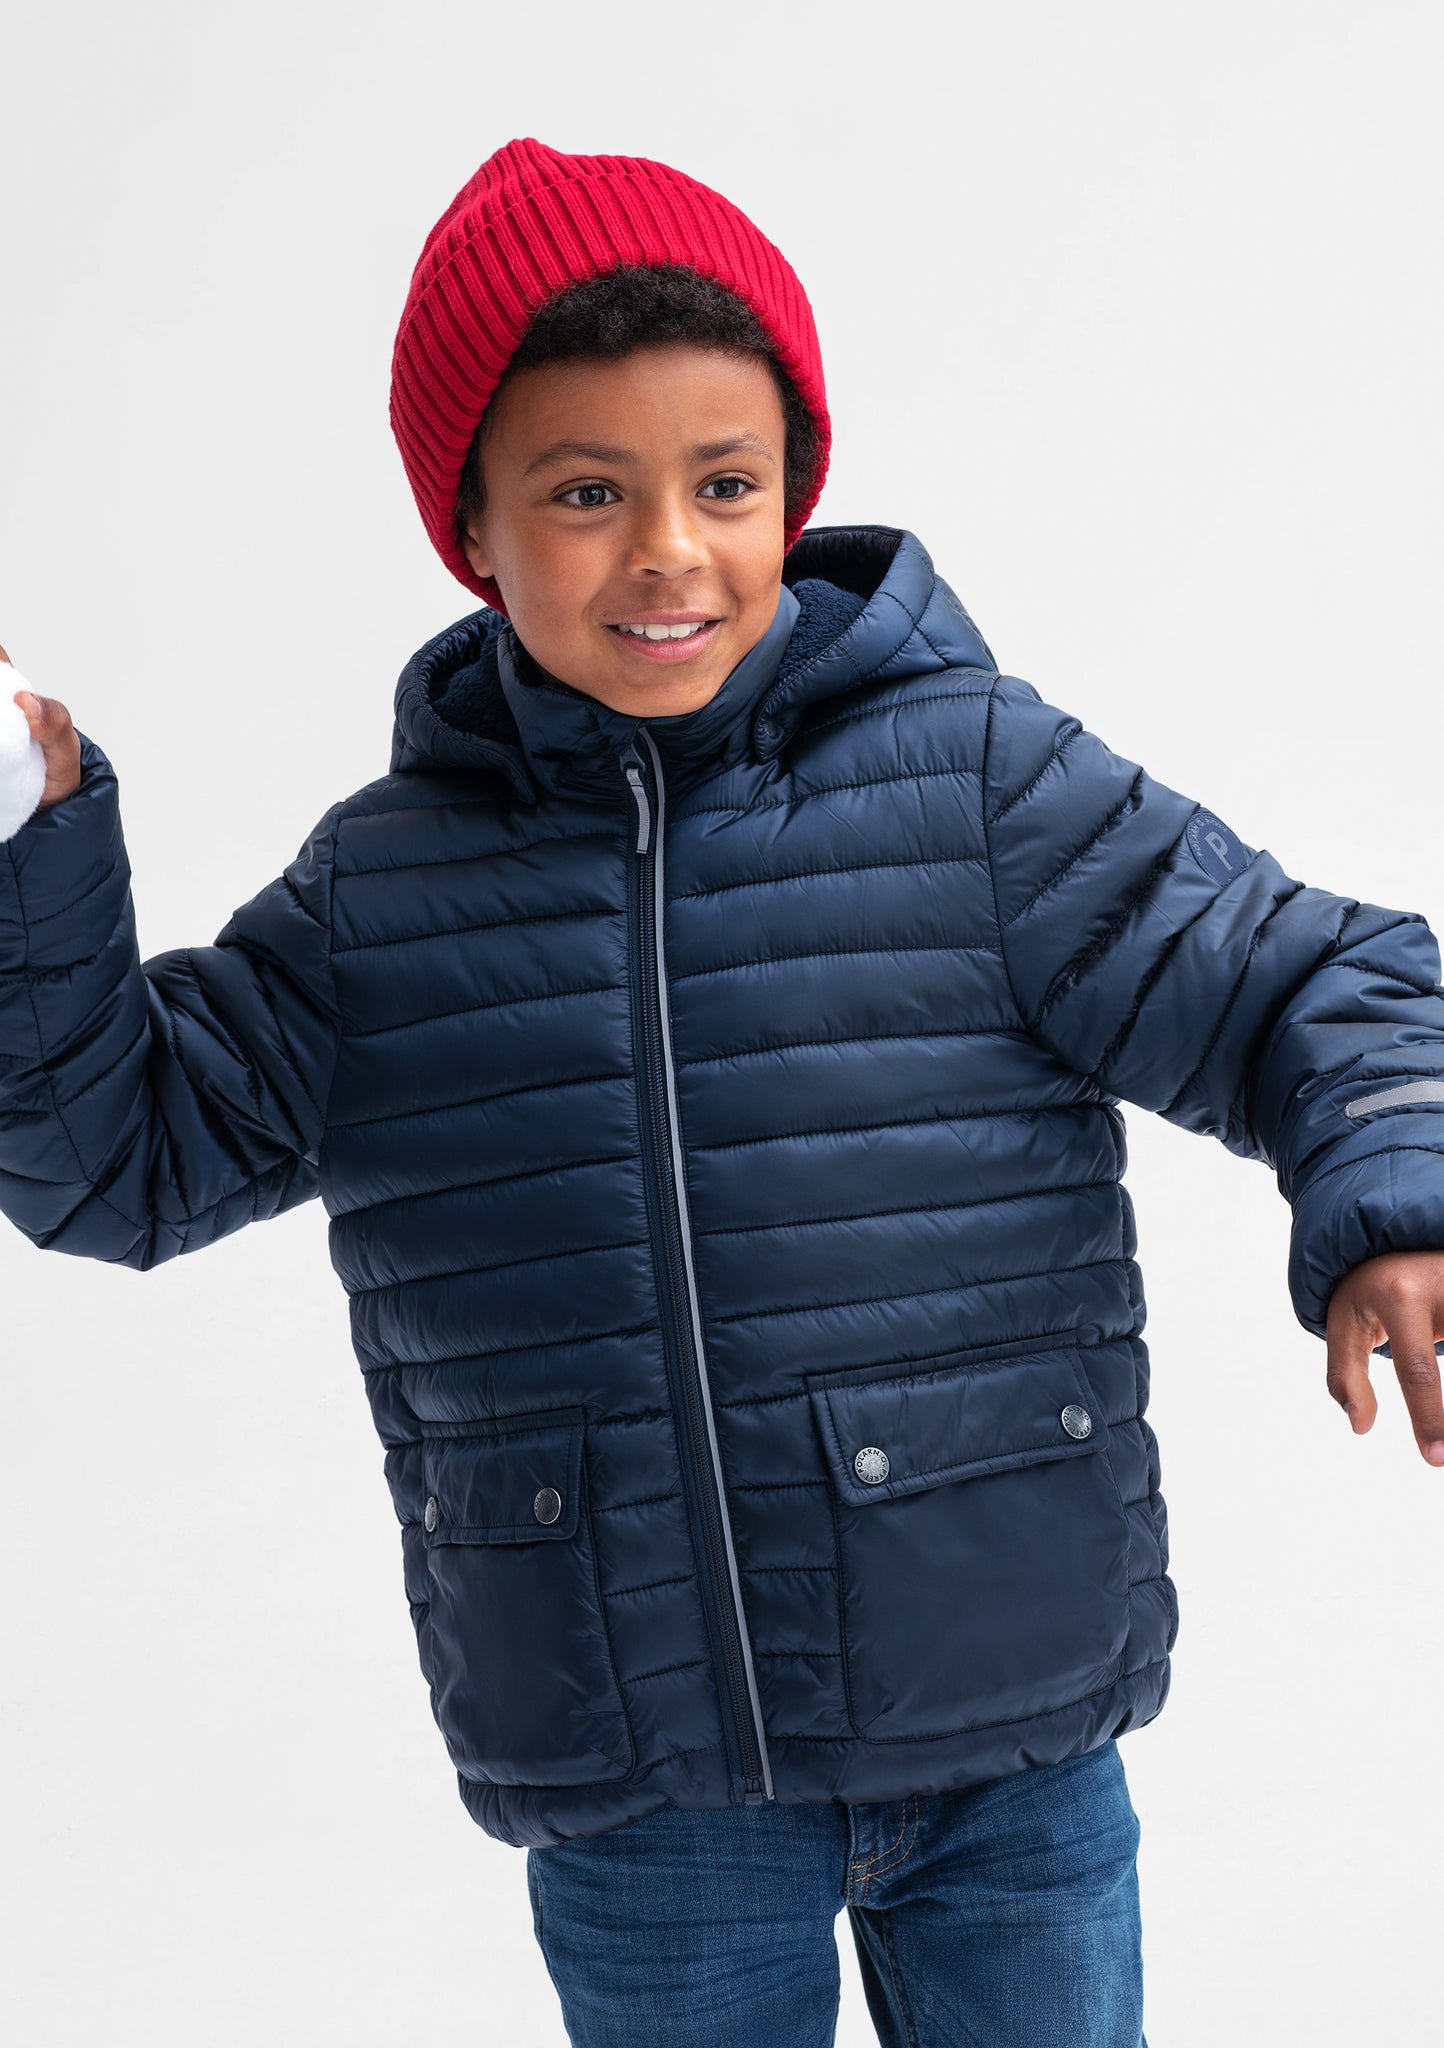 Kids Winter Puffer Jacket